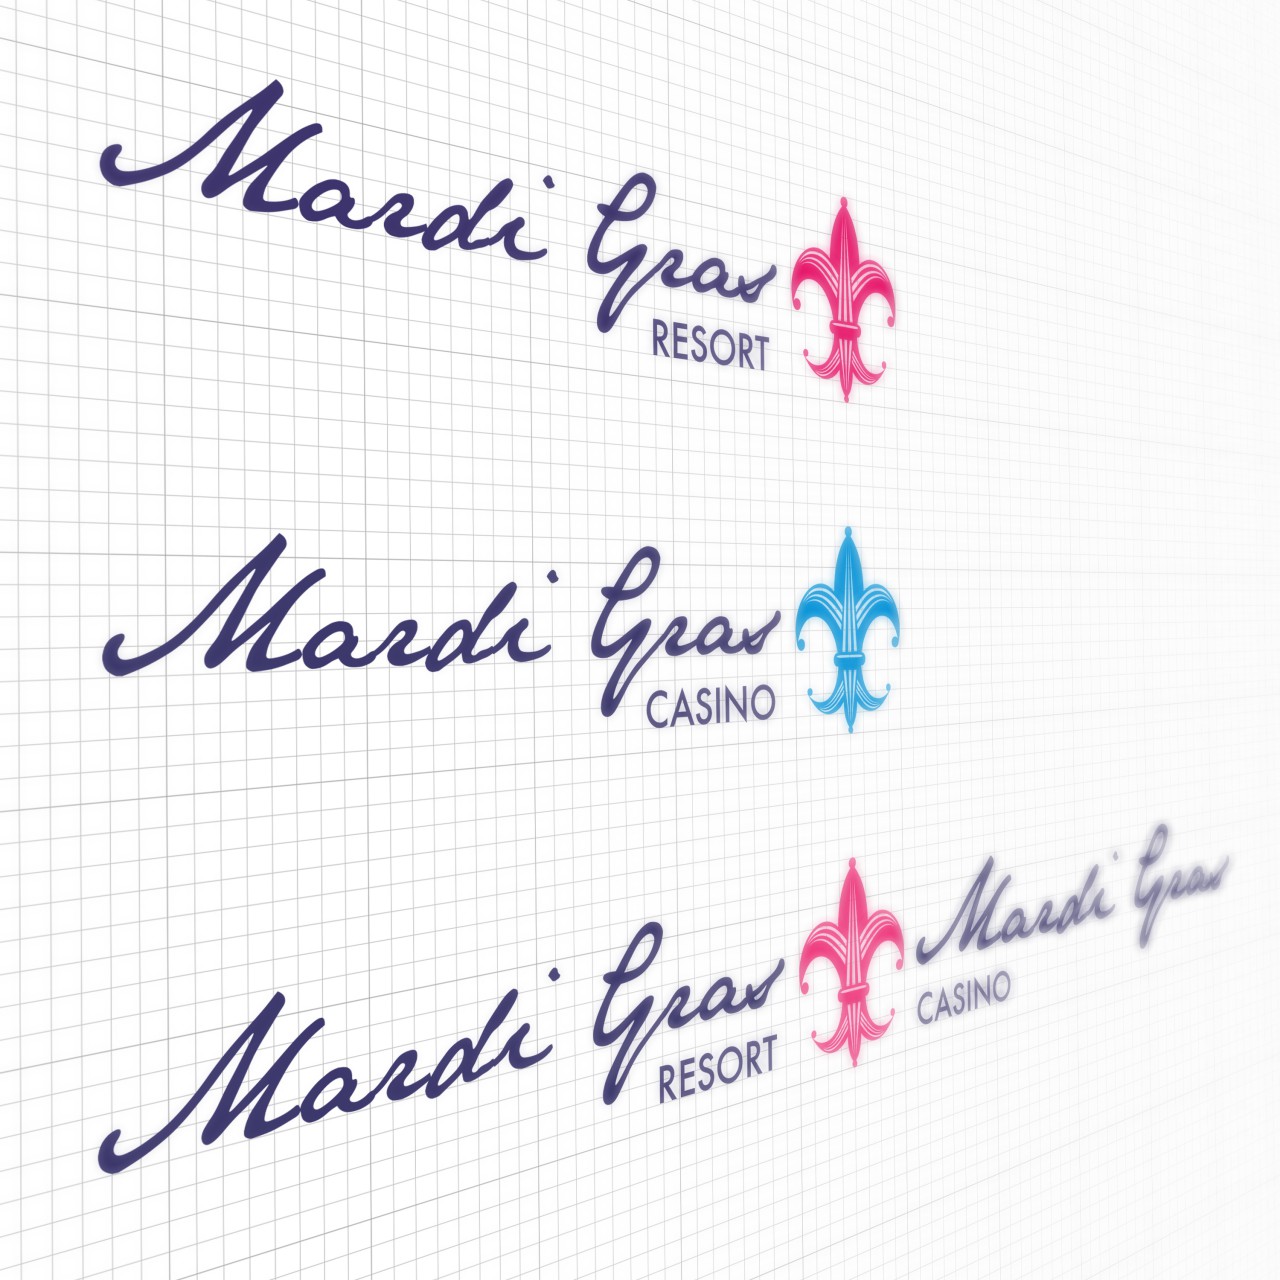 Image of Mardi Gras Resort logo alternates